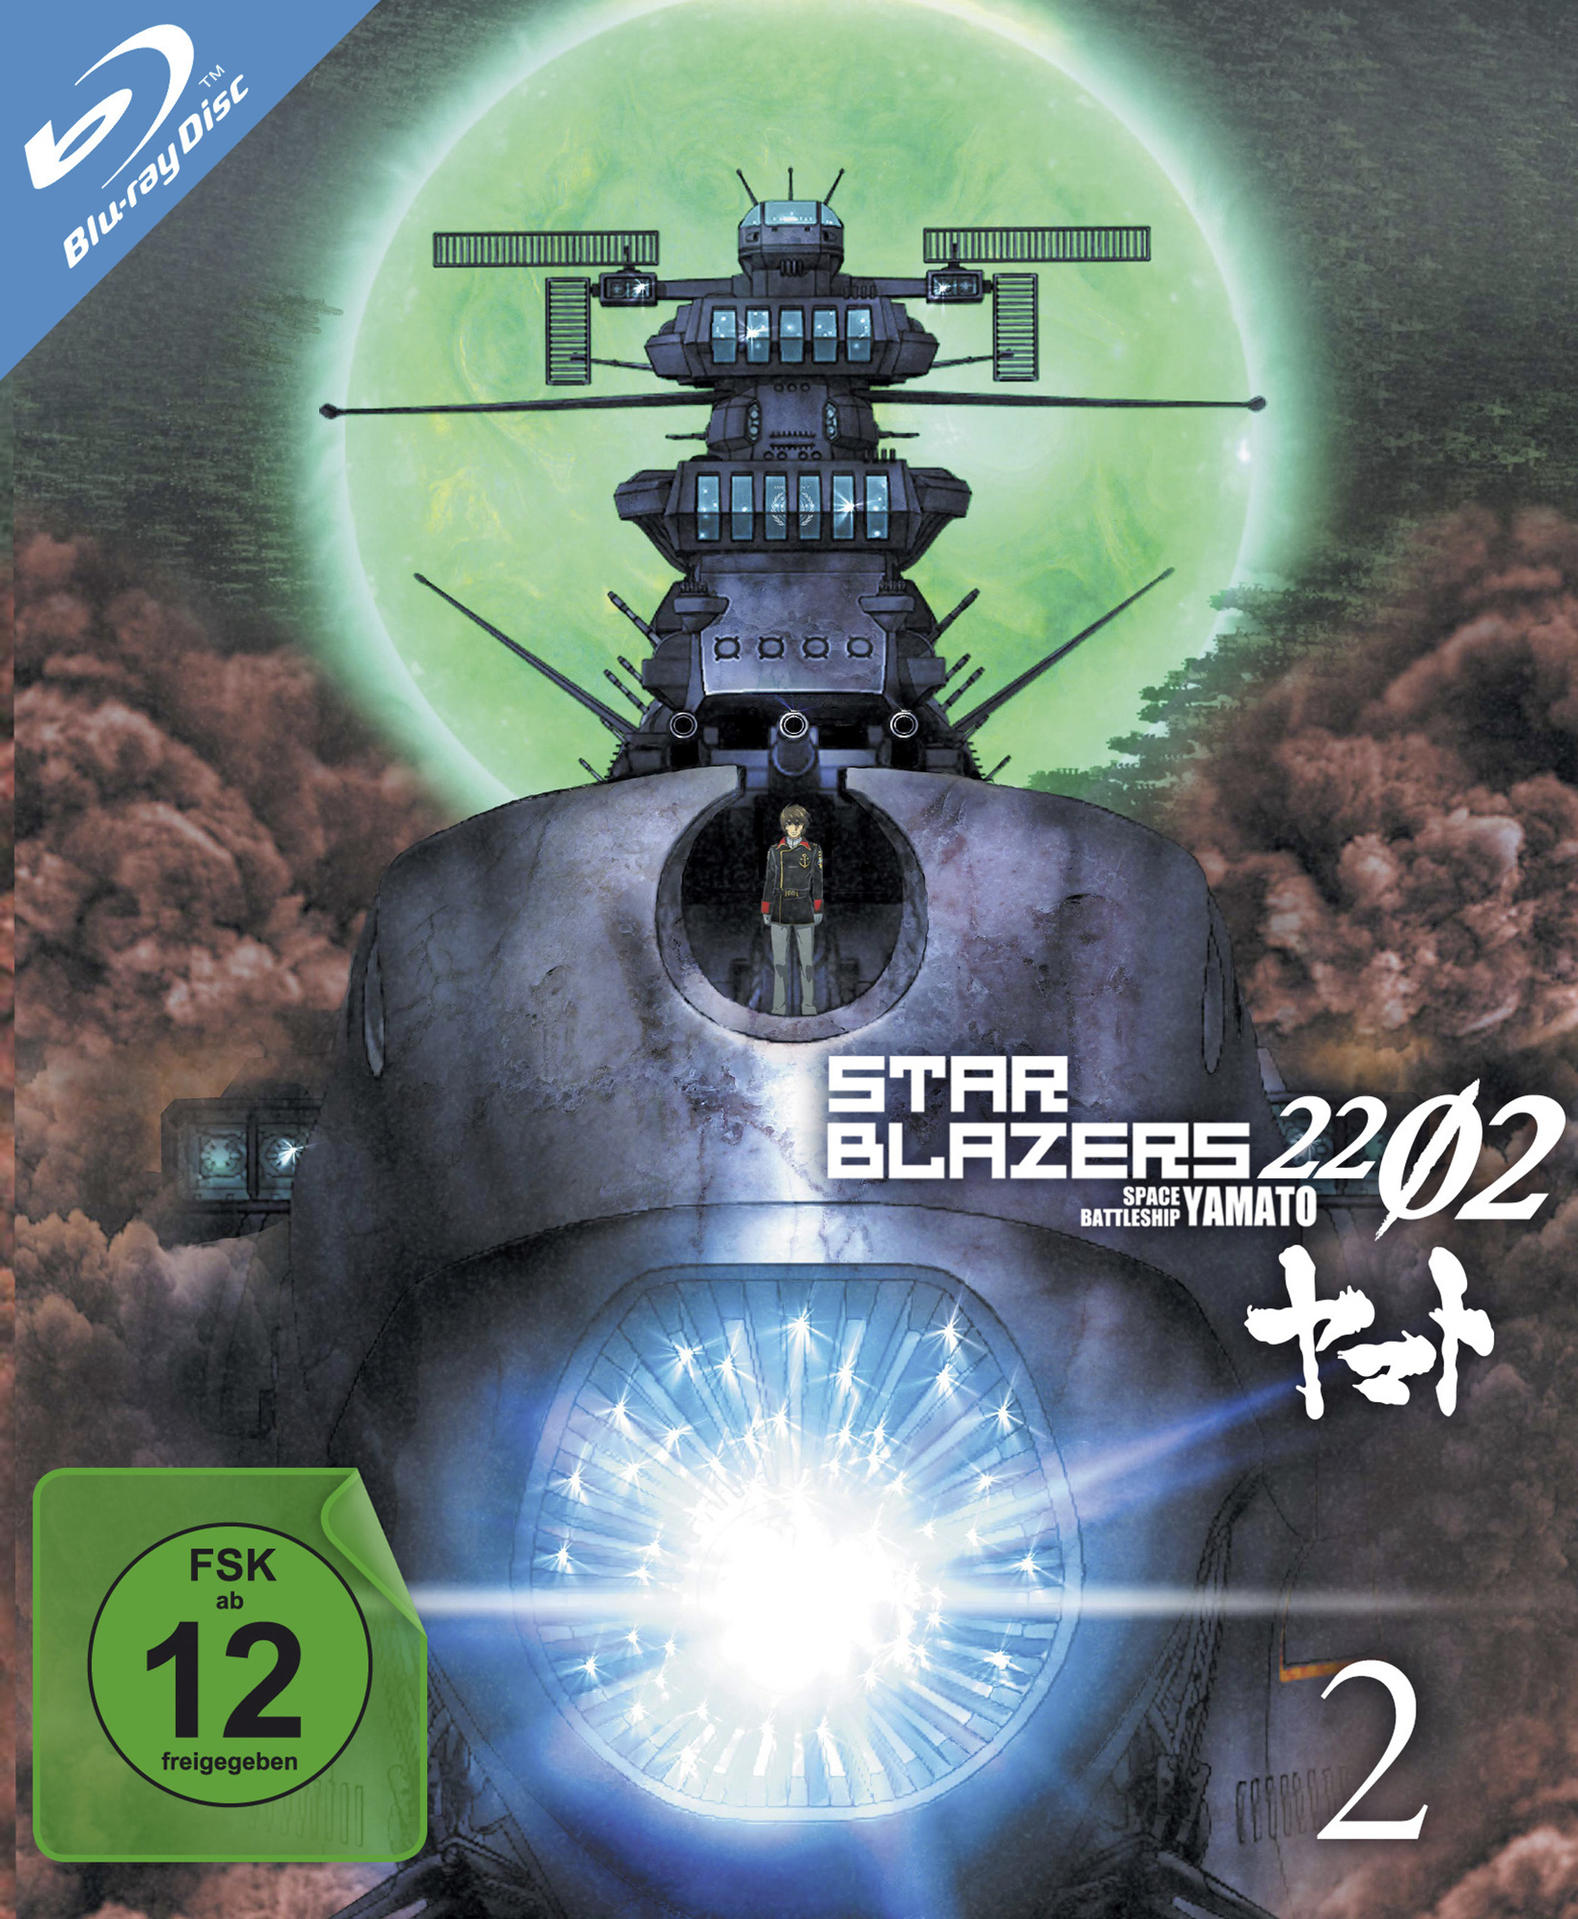 Star Blazers 2202 - Space Blu-ray Battleship Yamato - Vol.2